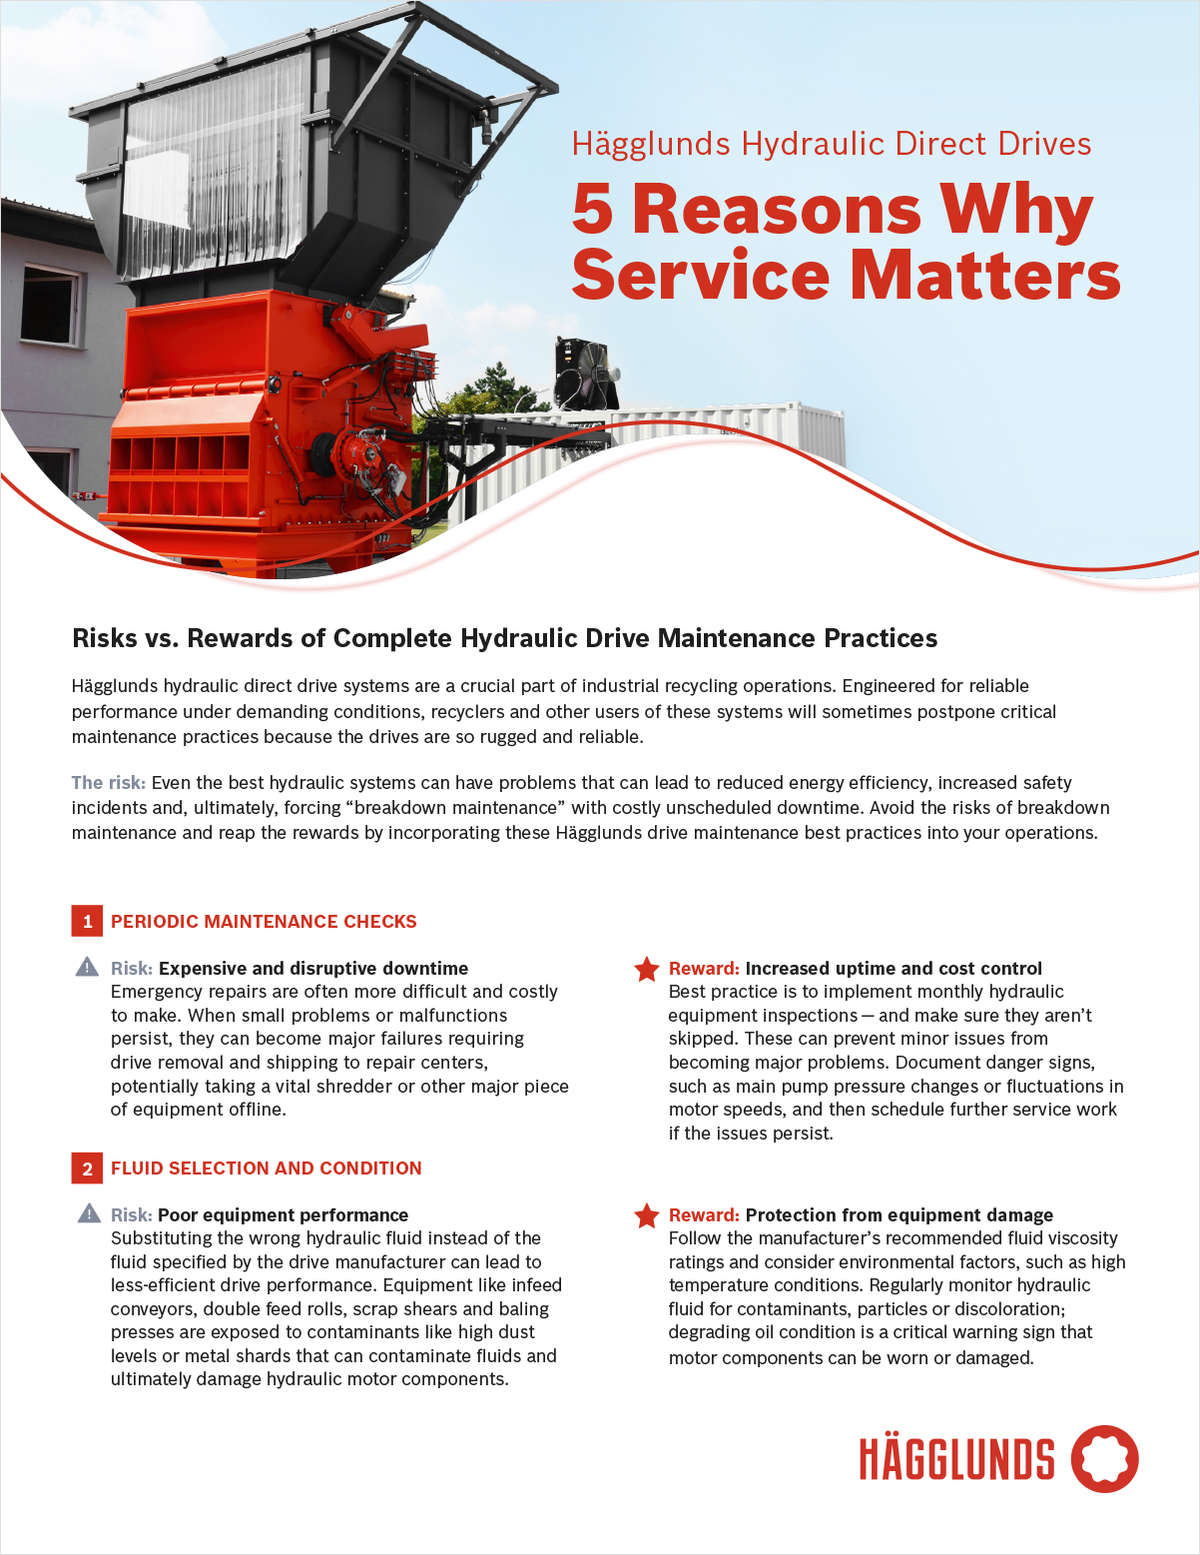 5 Reasons Why Service Matters: Risks vs. Rewards of Direct Drive Maintenance